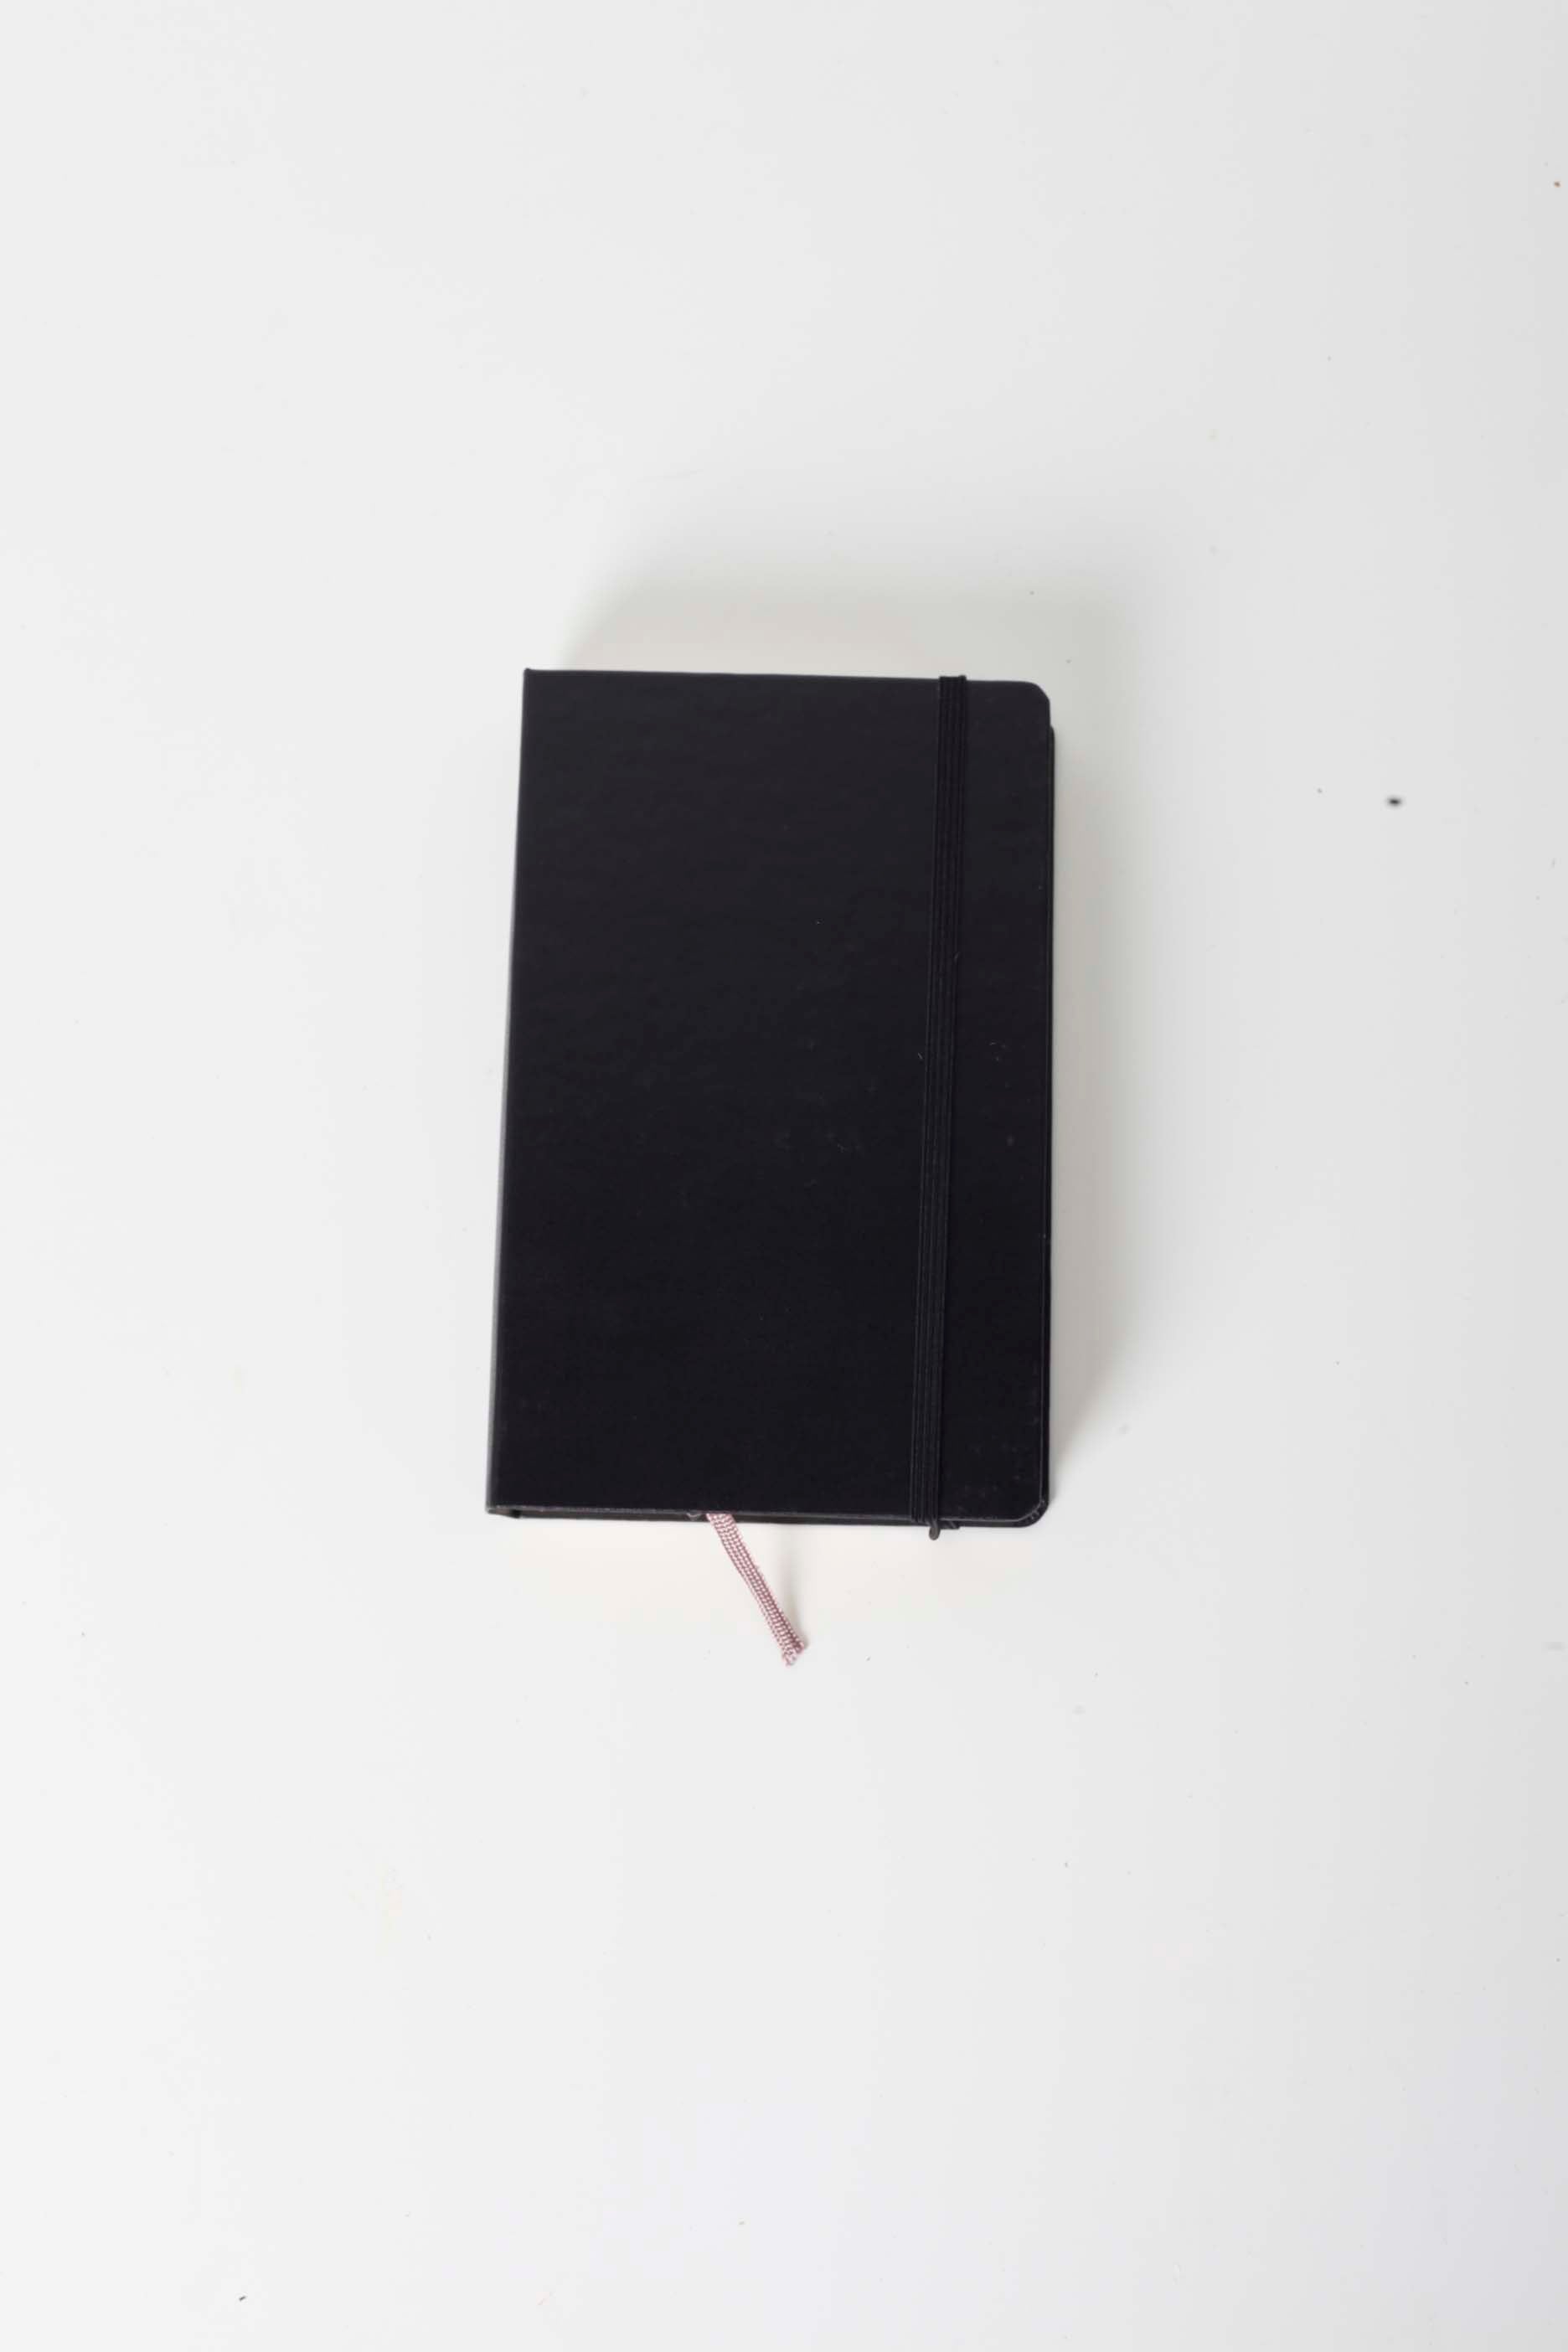 Black Leather-Bound Notebook